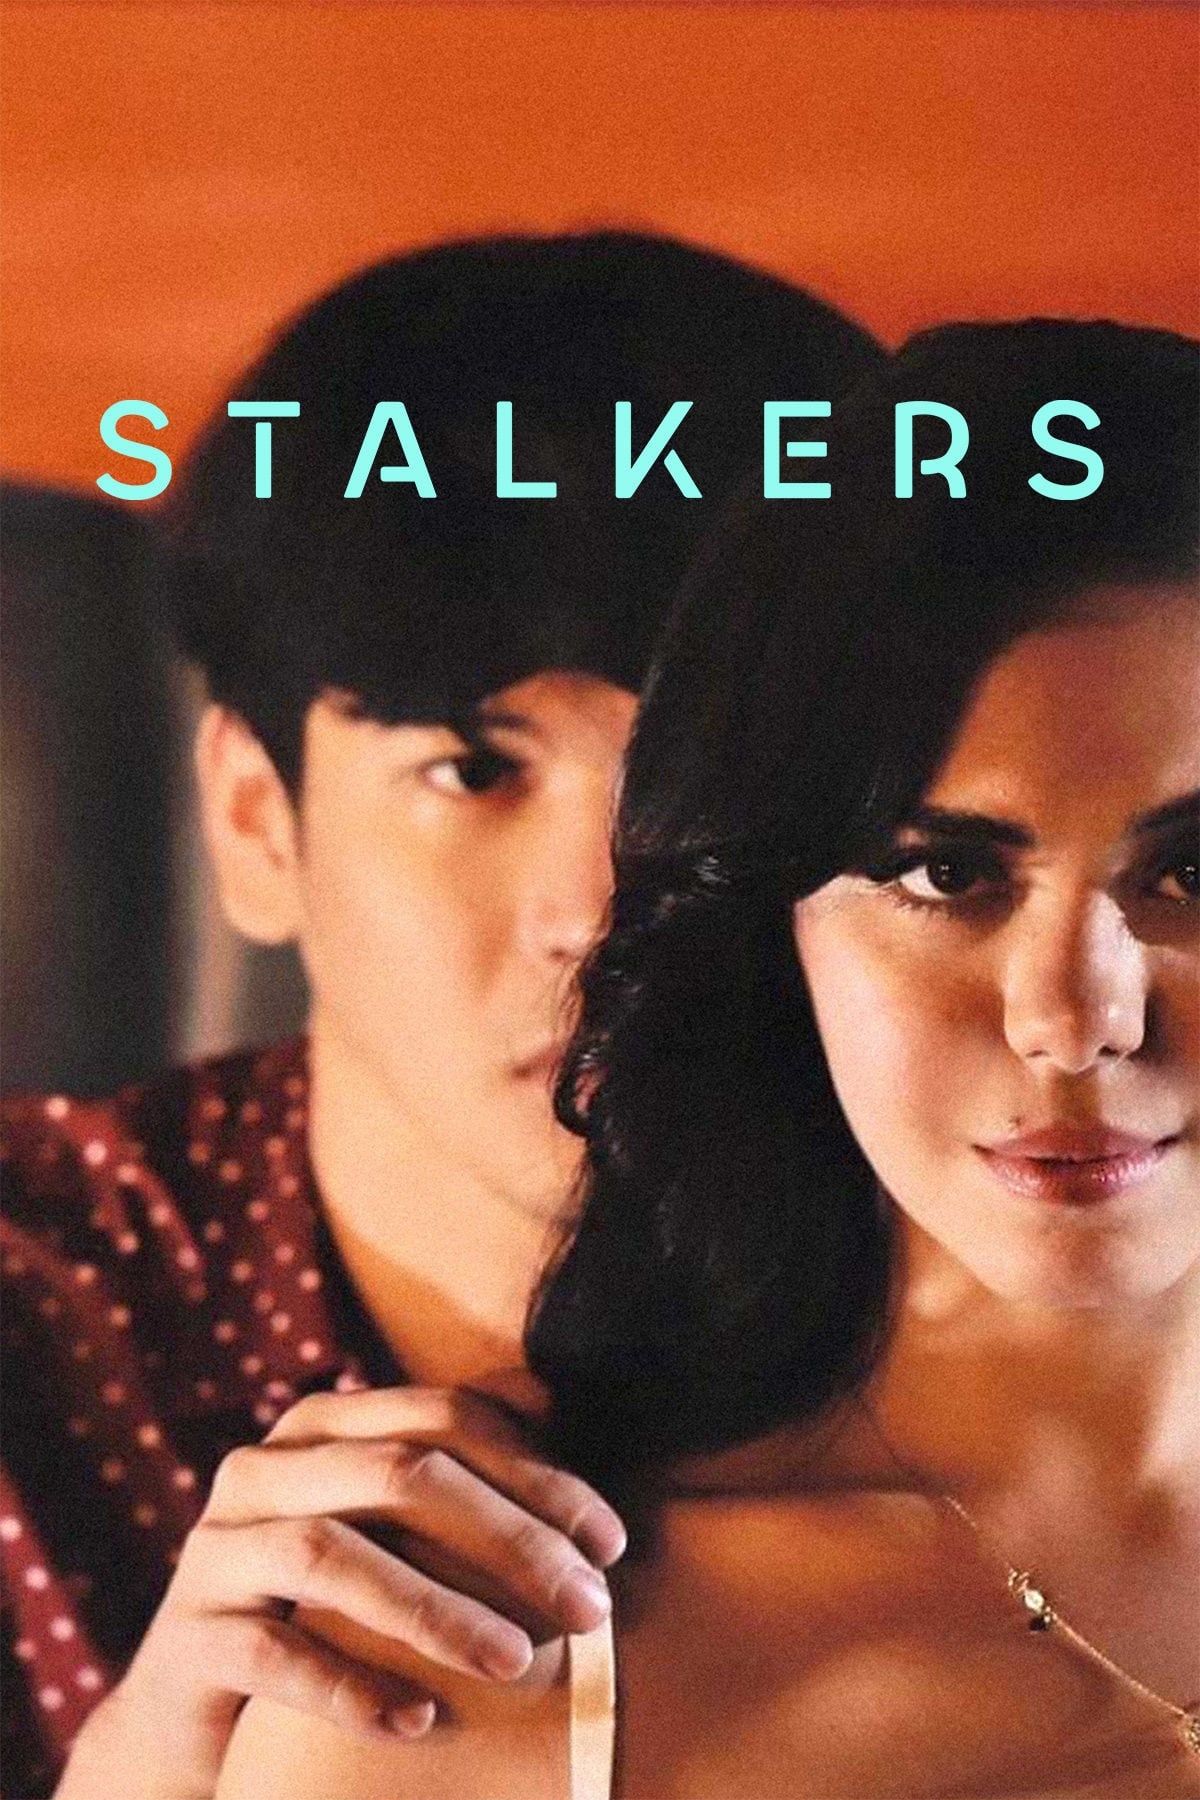 [18+] Stalkers (2023) S01E02 VMax Web Series HDRip download full movie